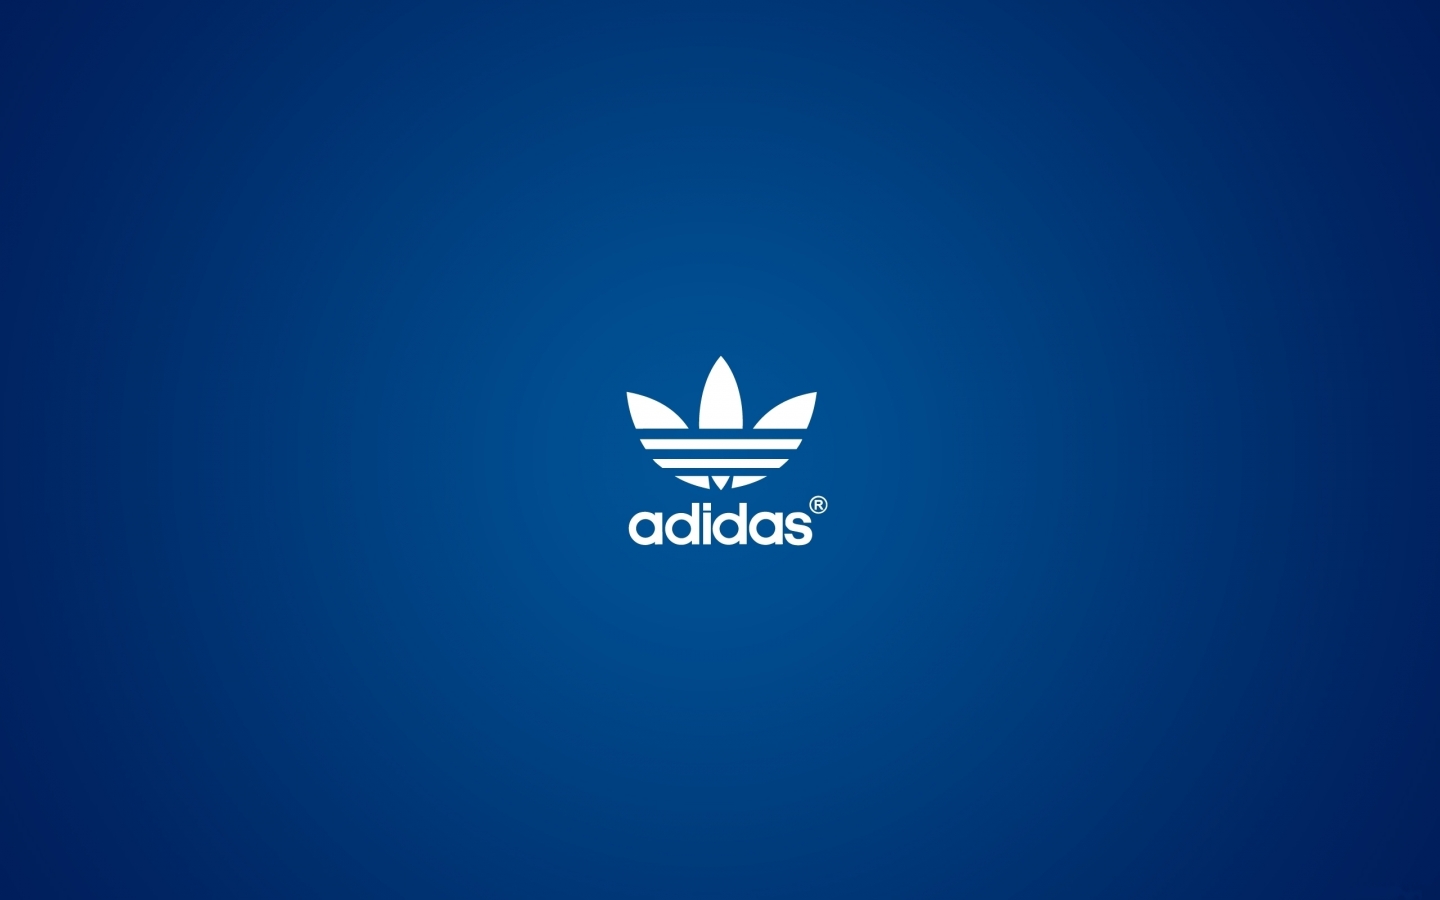 Adidas Logo for 1440 x 900 widescreen resolution